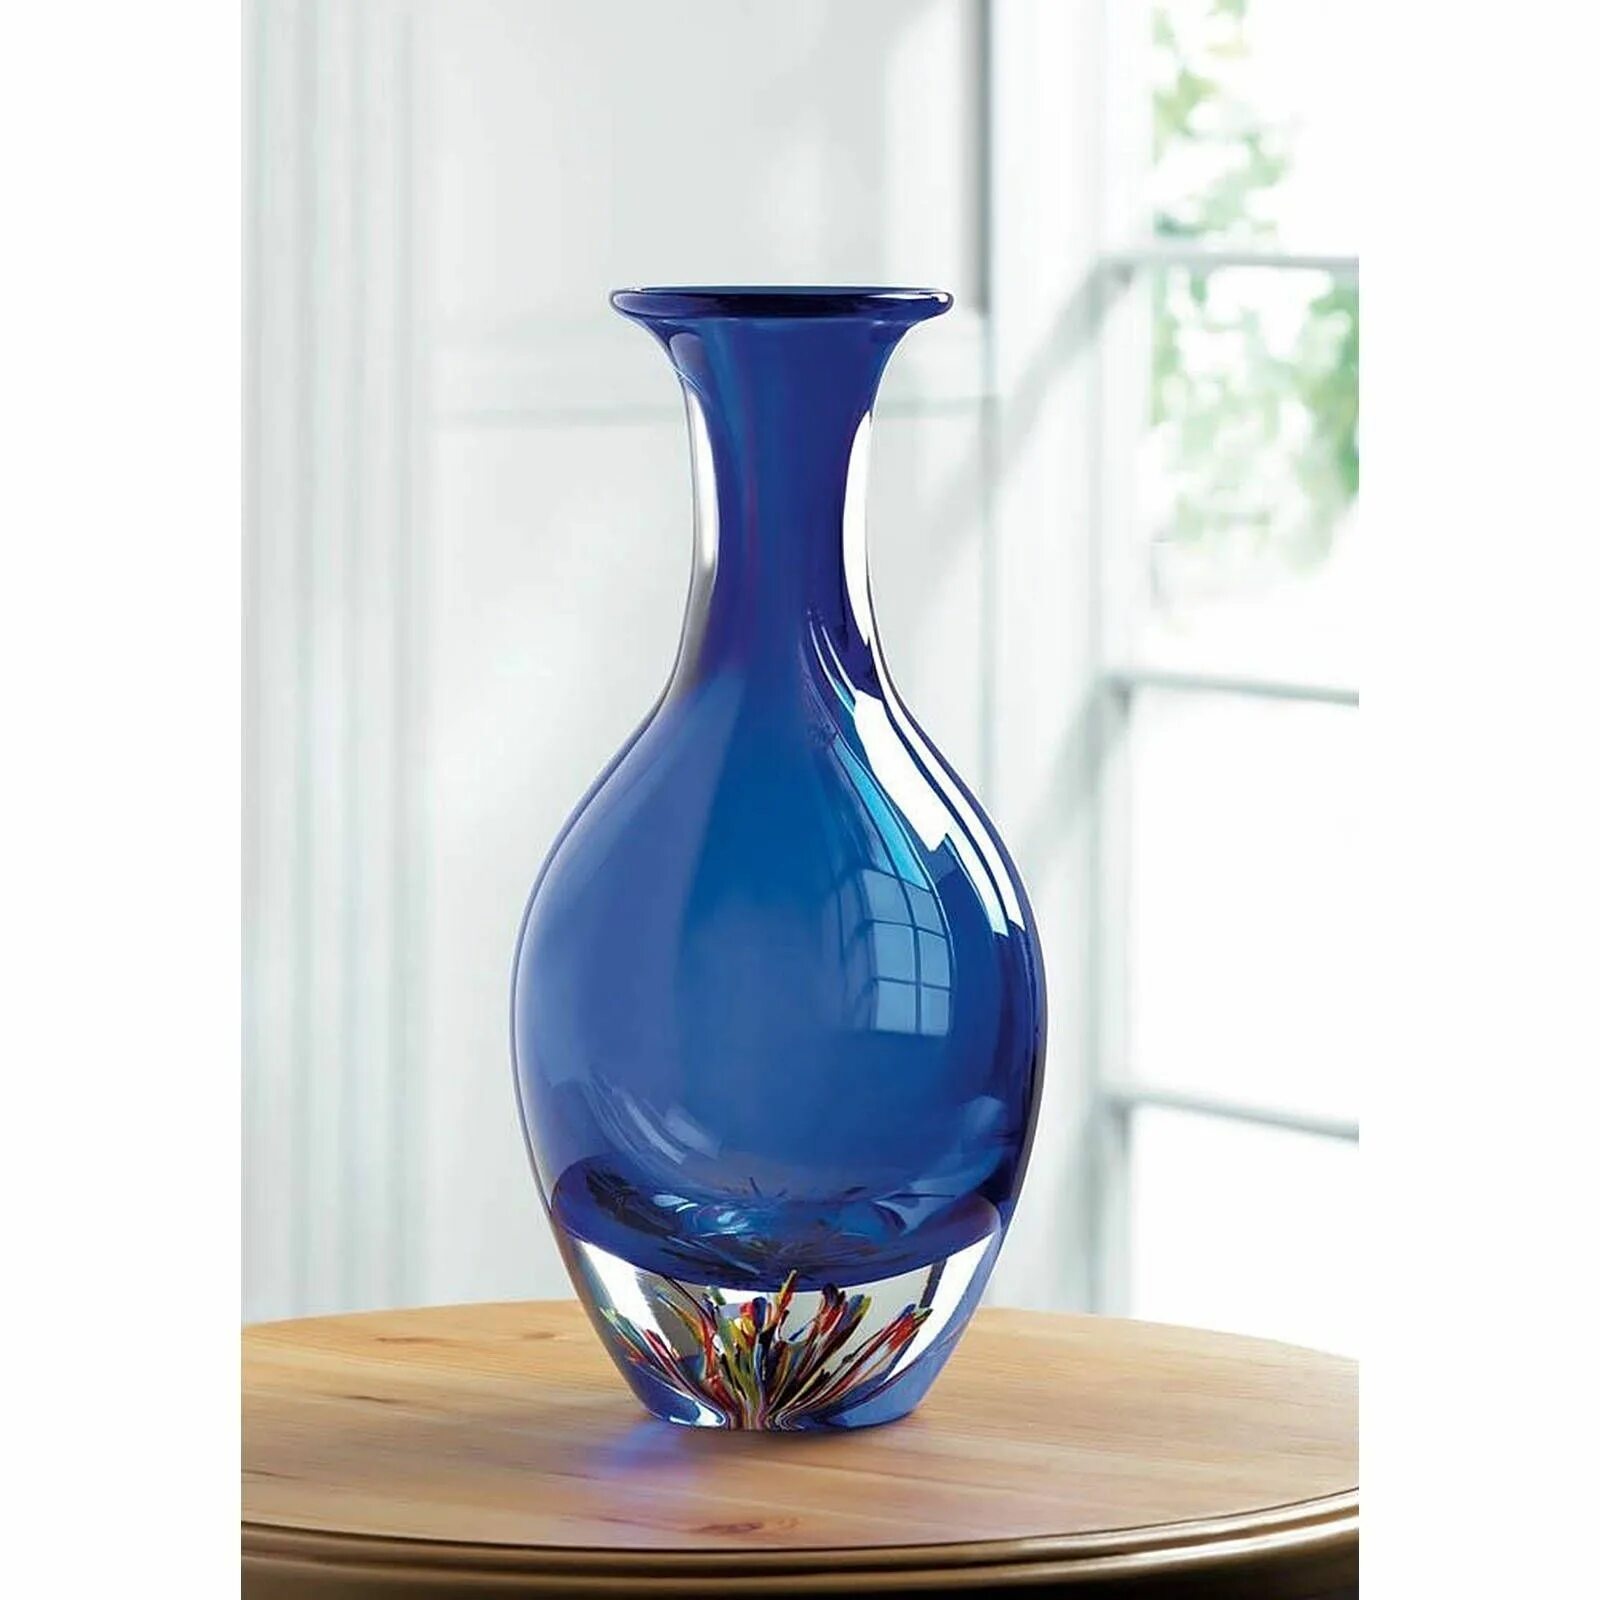 Ваза для цветов цветное стекло. Glass Vase ваза. Ваза PARTGLASS 17102/0150/AA-0001 стекло. Ваза синяя. Стеклянная вазочка.